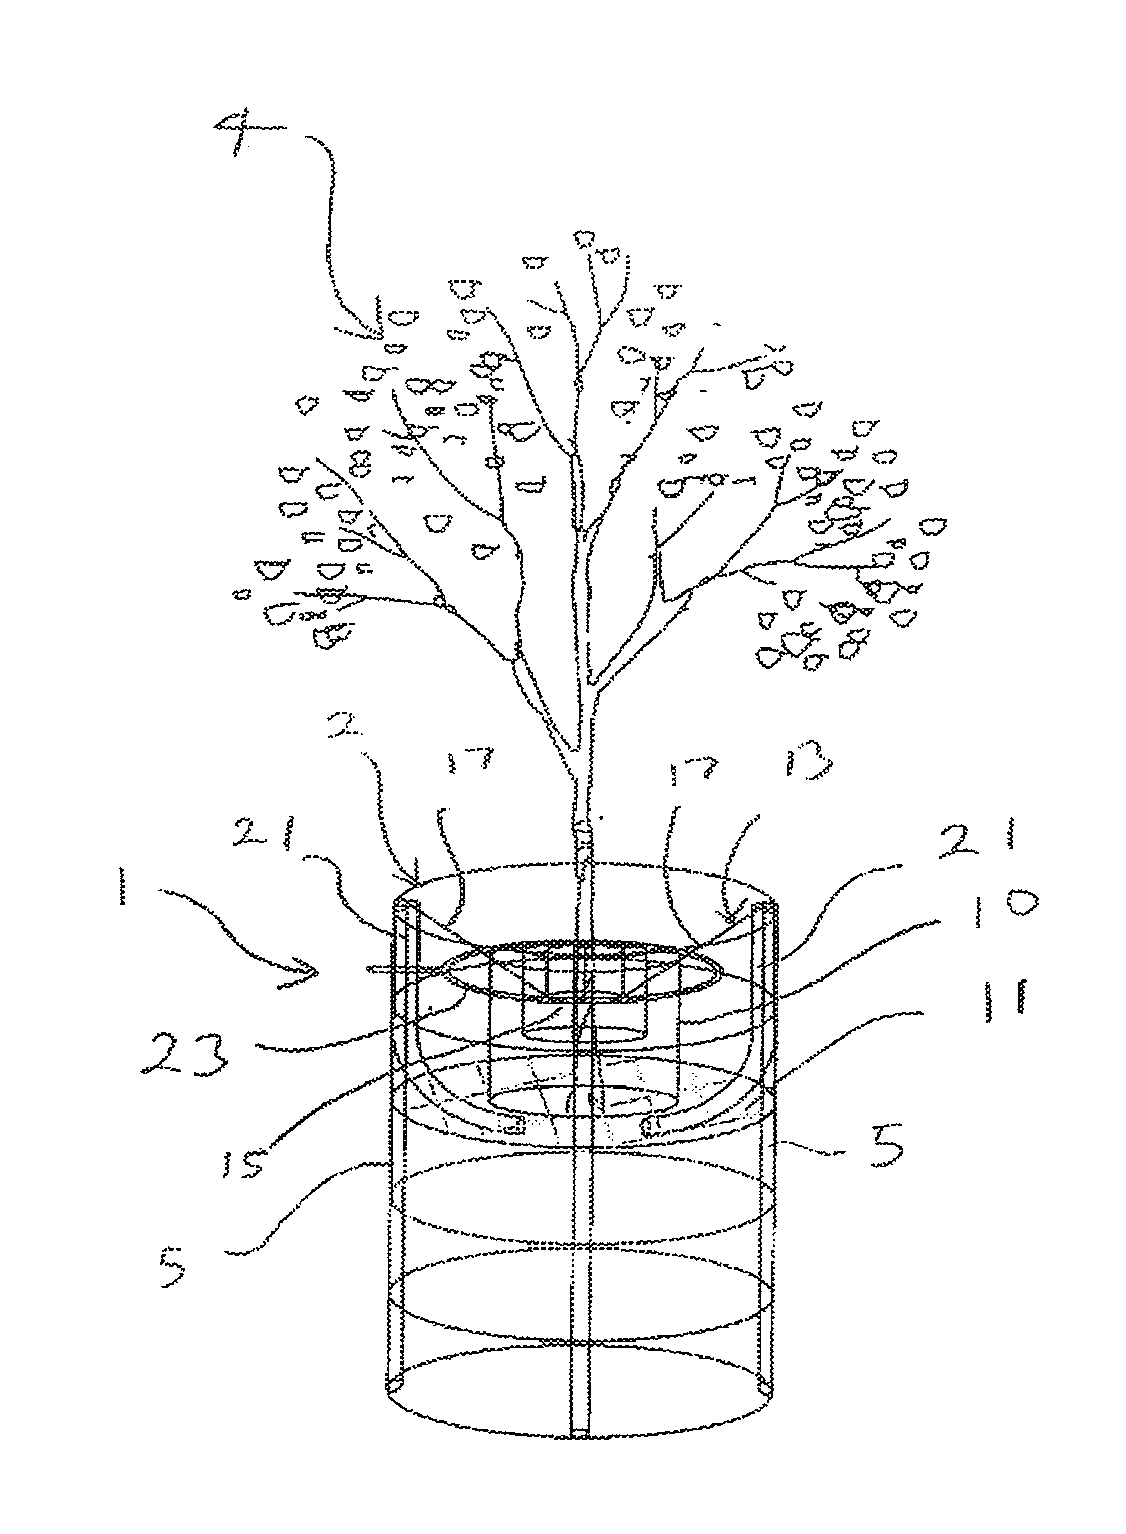 Modular planting system